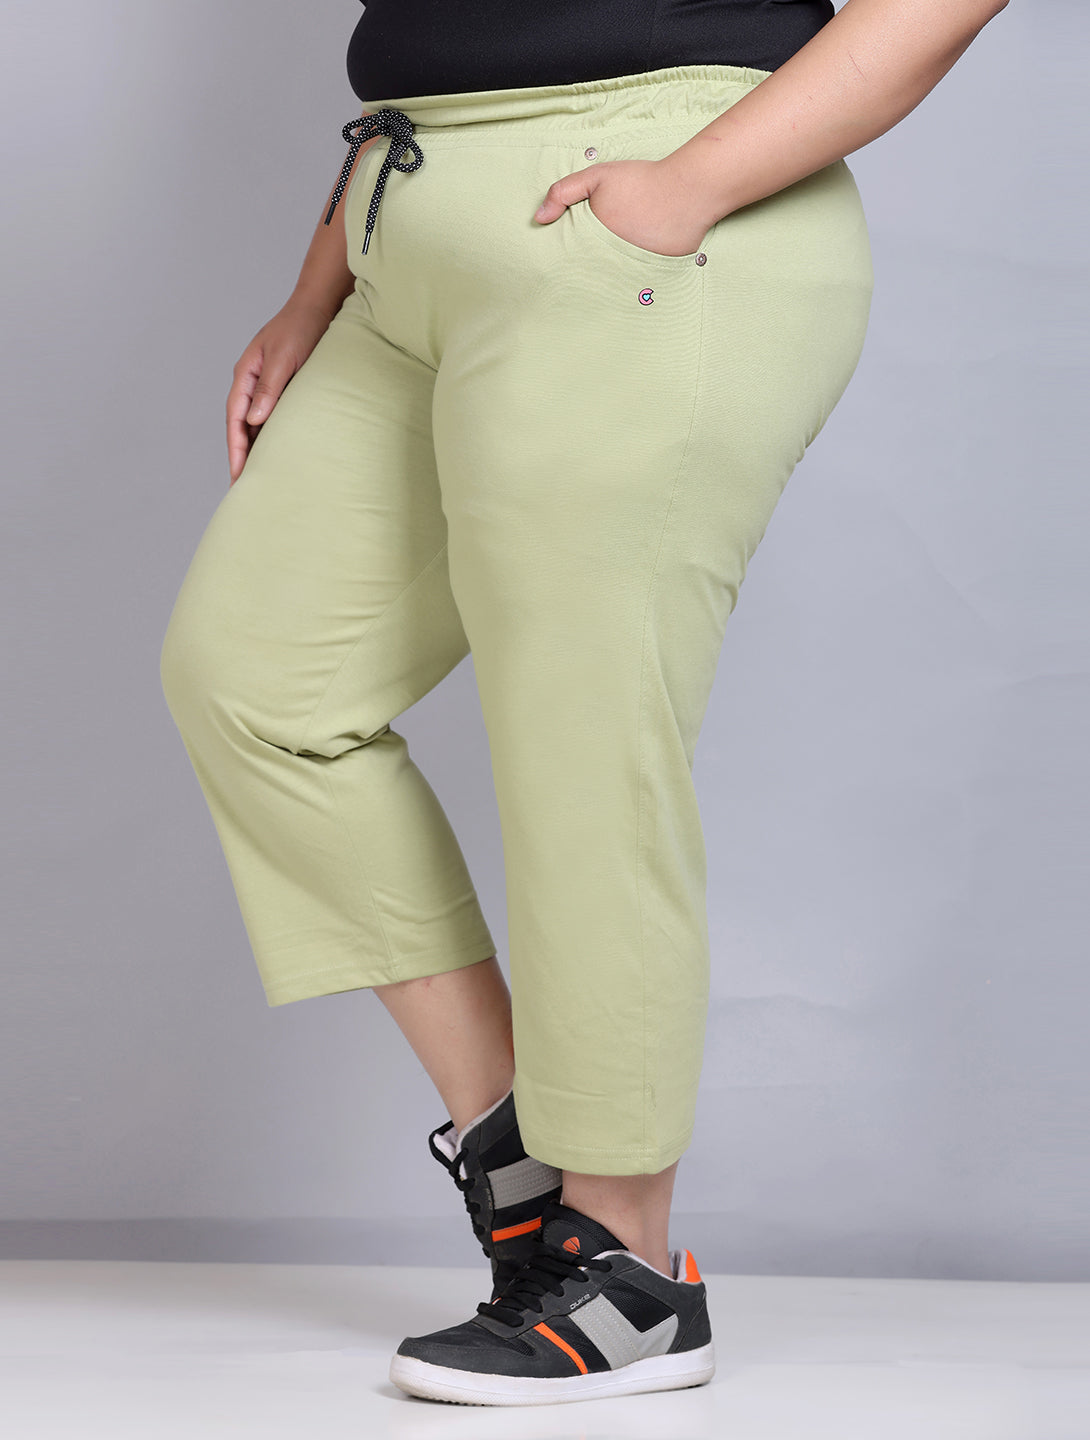 Buy Comfy Cardamom Green Half Cotton Capri Pants For Women Online